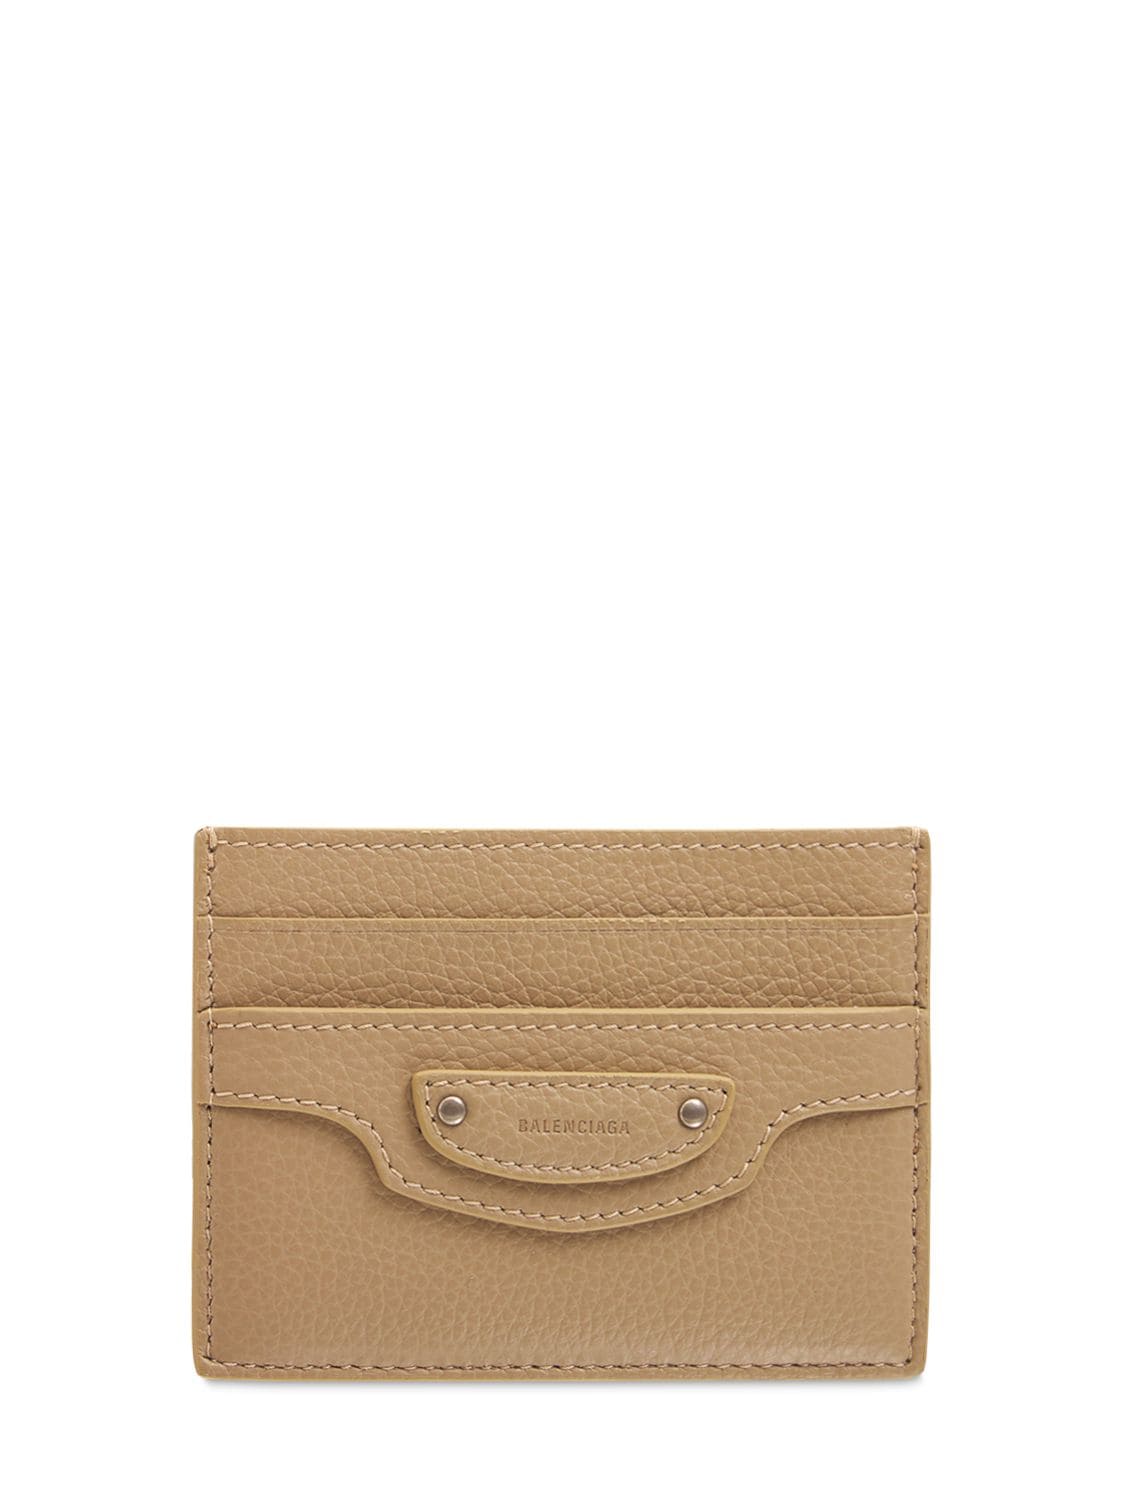 BALENCIAGA Neo Classic textured-leather cardholder